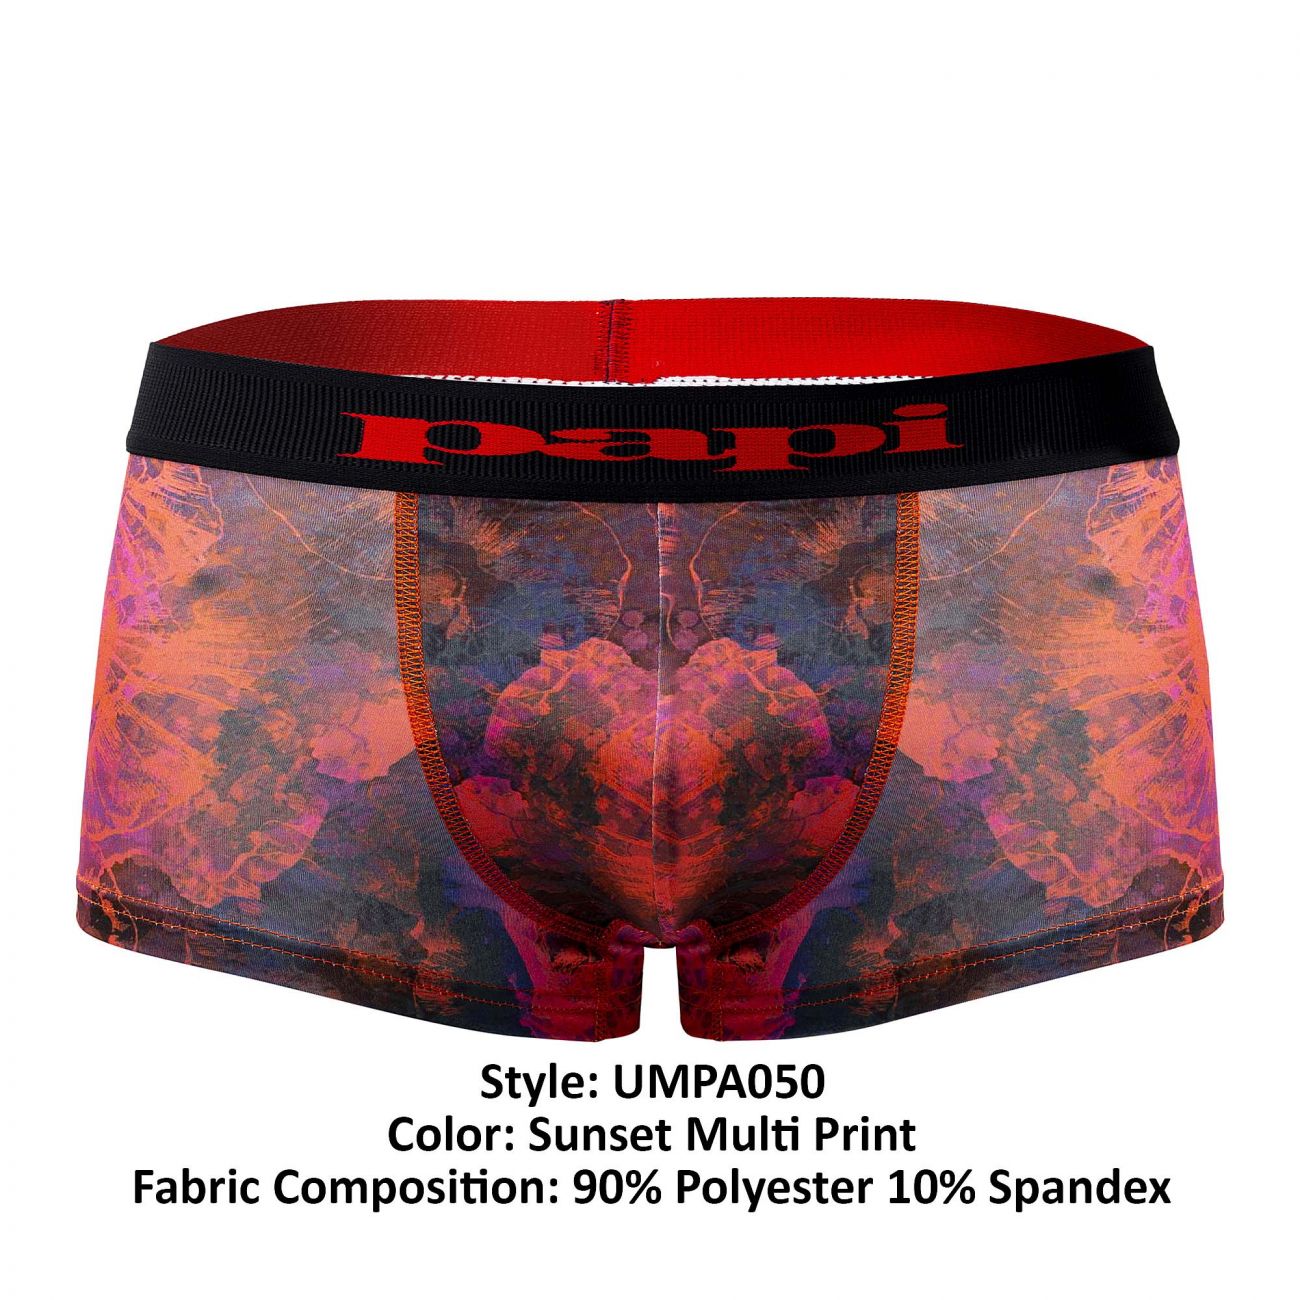 Papi UMPA050 Fashion Microflex Brazilian Trunks Sunset Multi Print